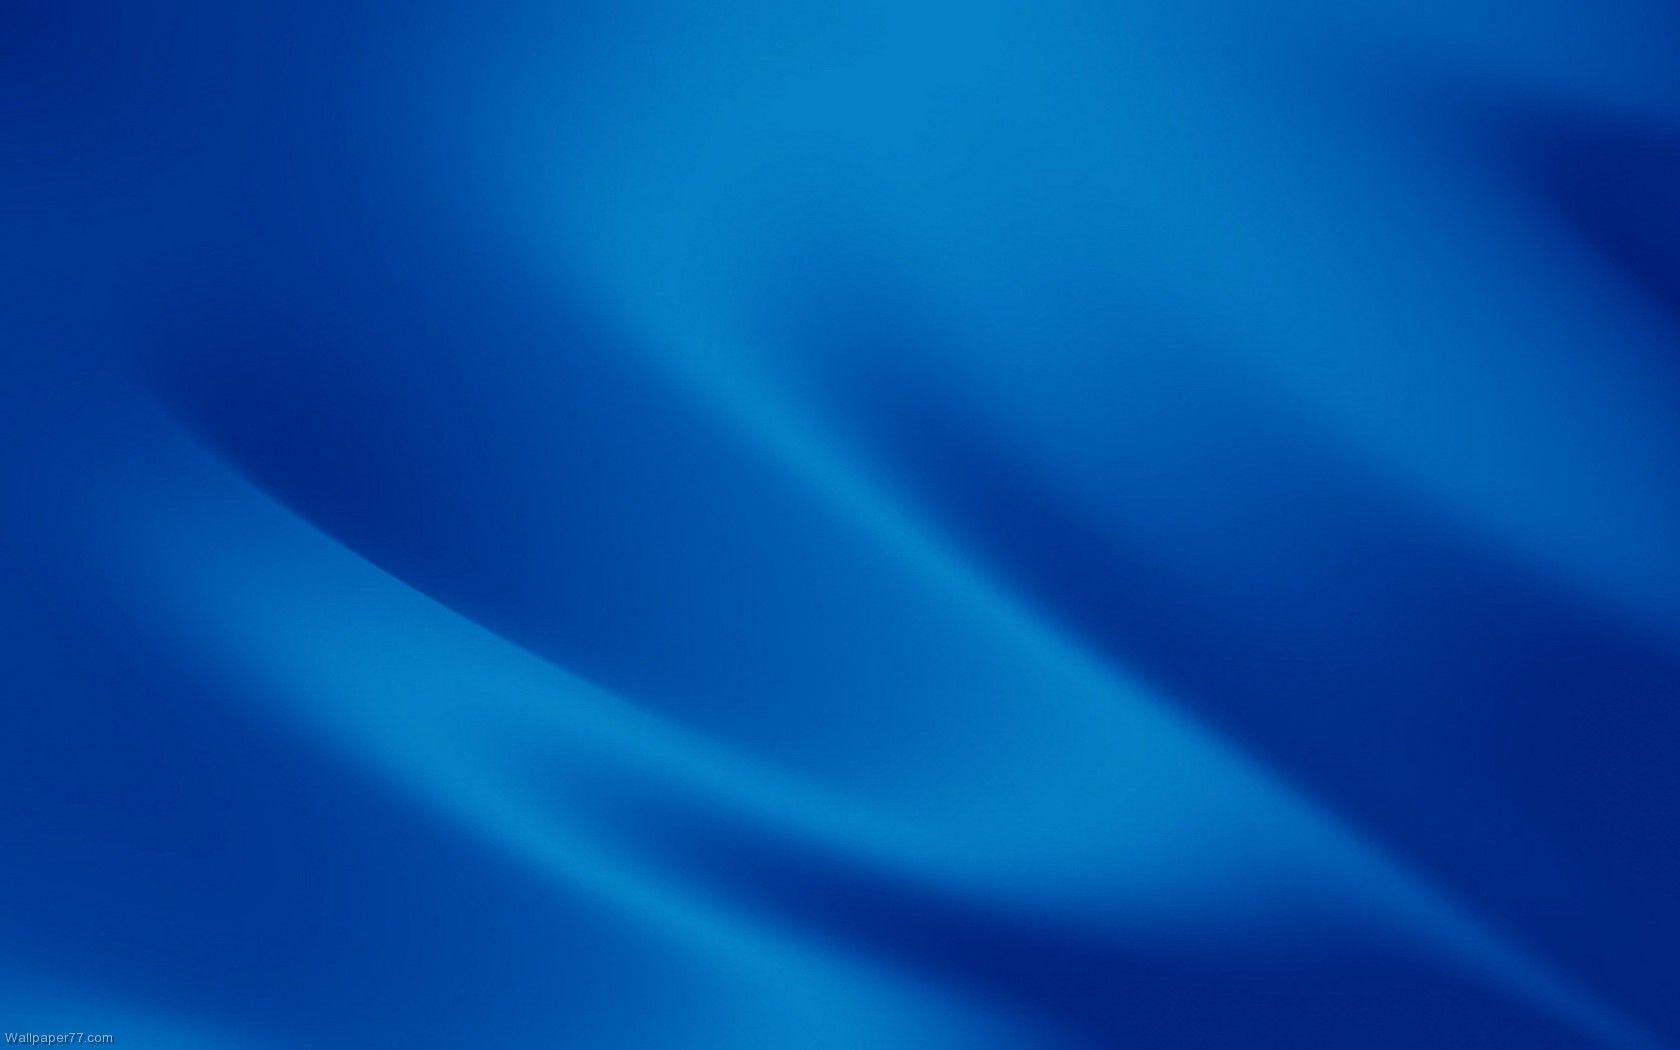 Royal Blue Abstract Wallpapers - Top Free Royal Blue Abstract